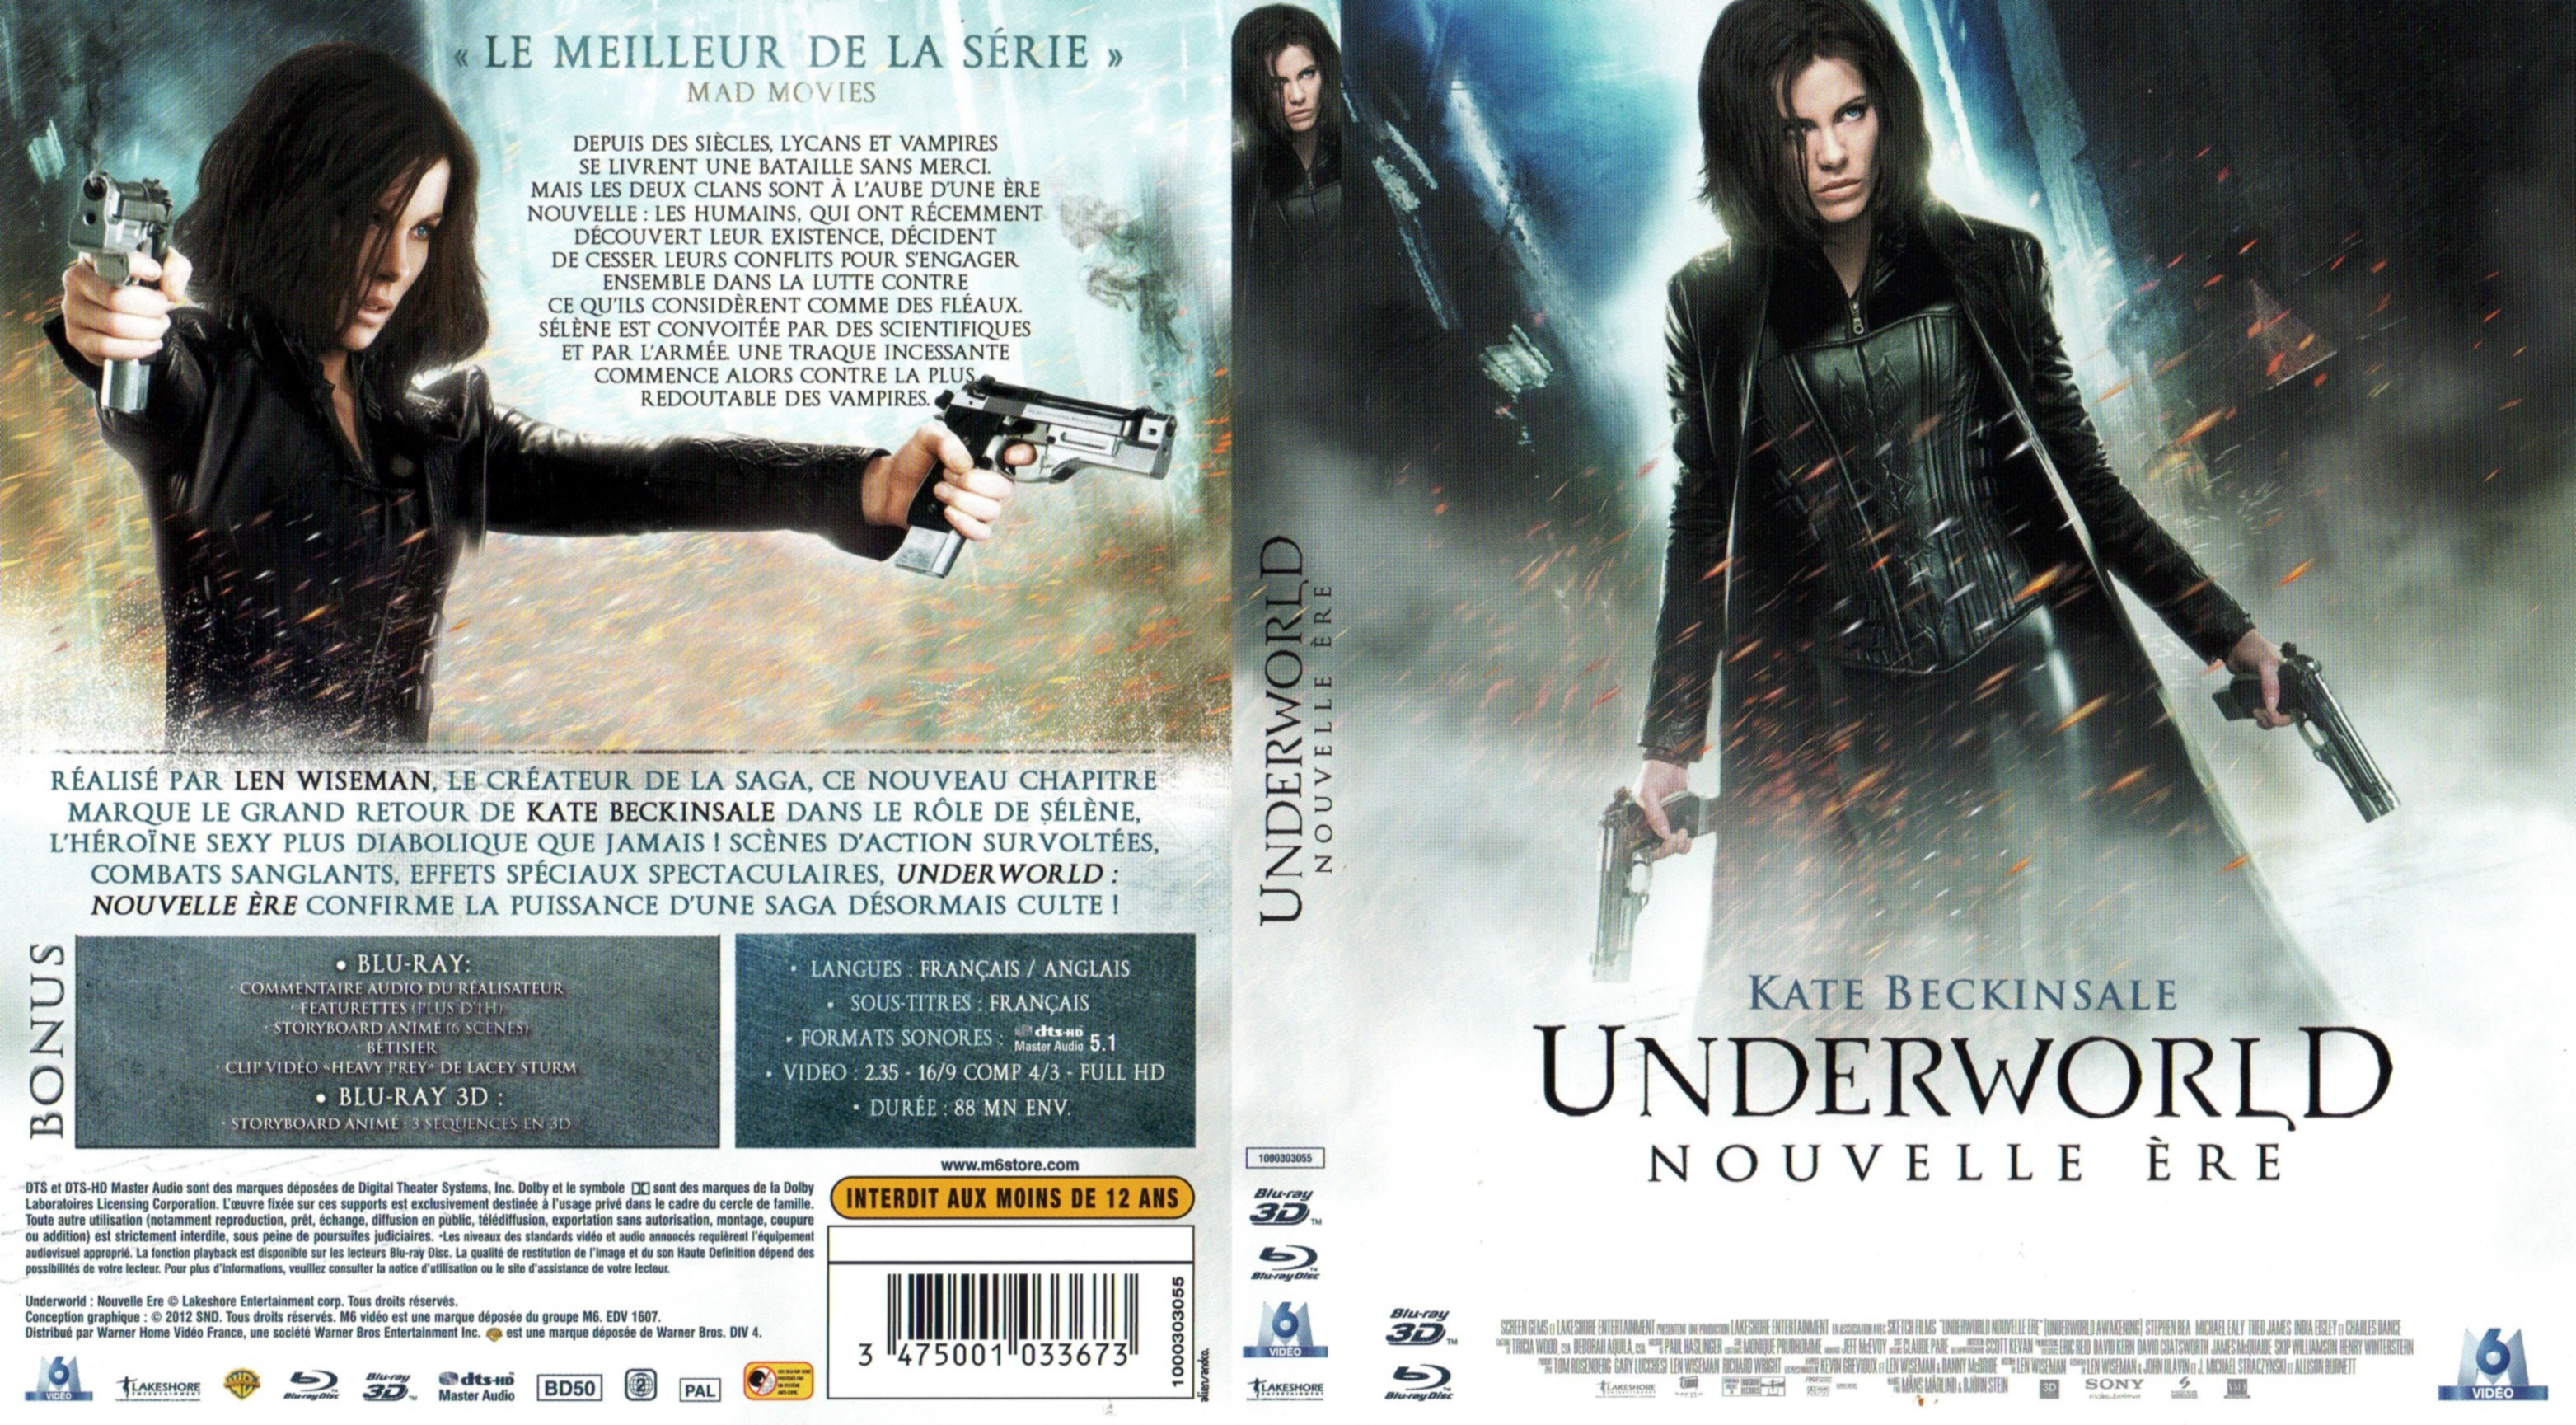 Jaquette DVD Underworld Nouvelle re (BLU-RAY)